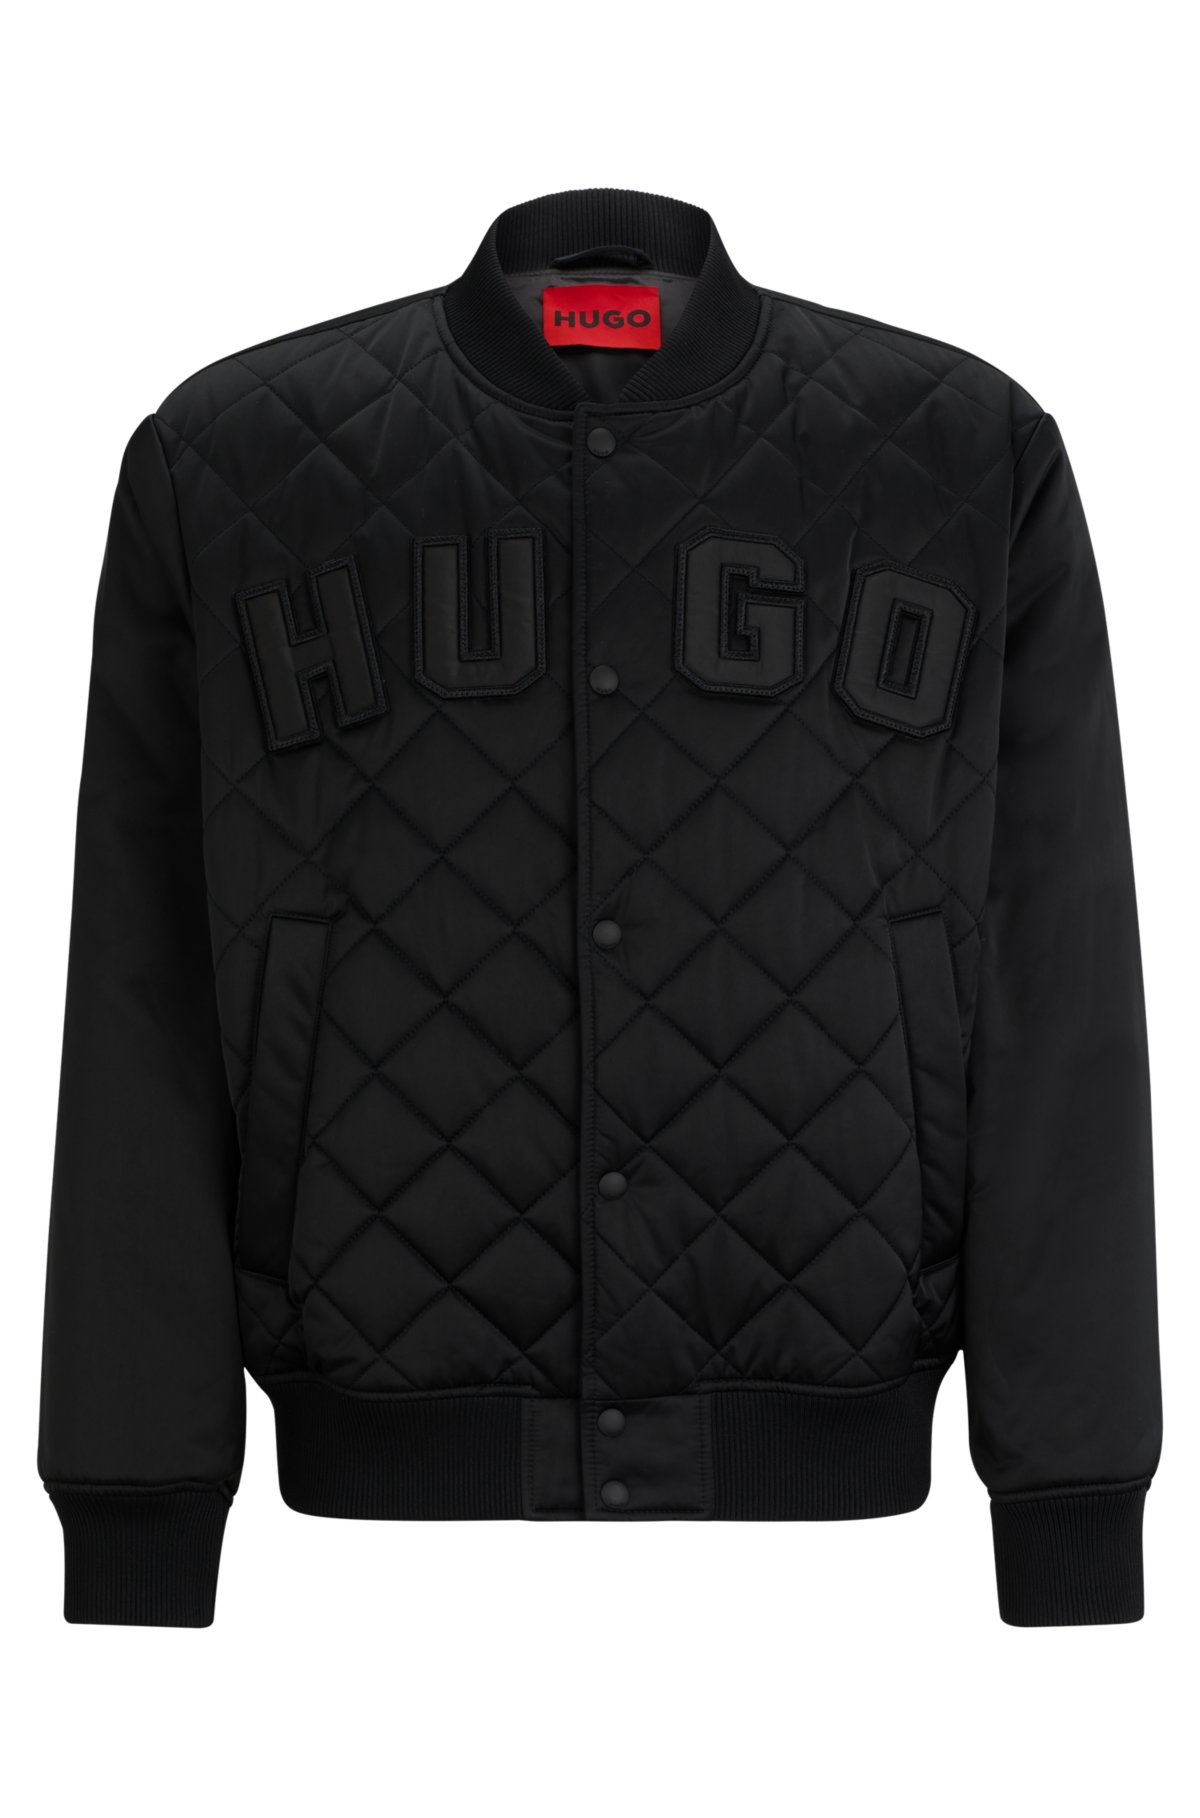 HUGO BOSS     HUGOボンバージャケット　XL ブラック肩幅５３